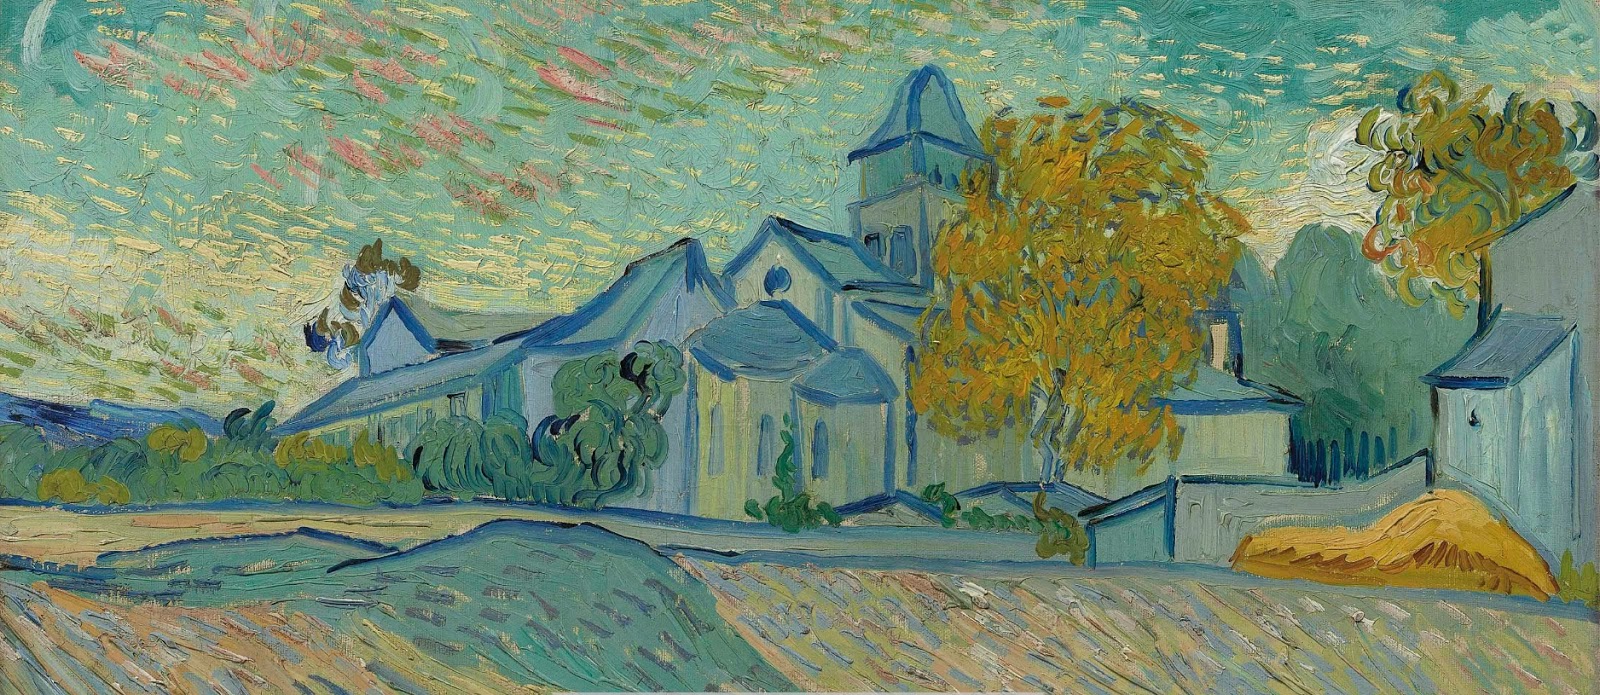 Vincent+Van+Gogh-1853-1890 (495).jpg